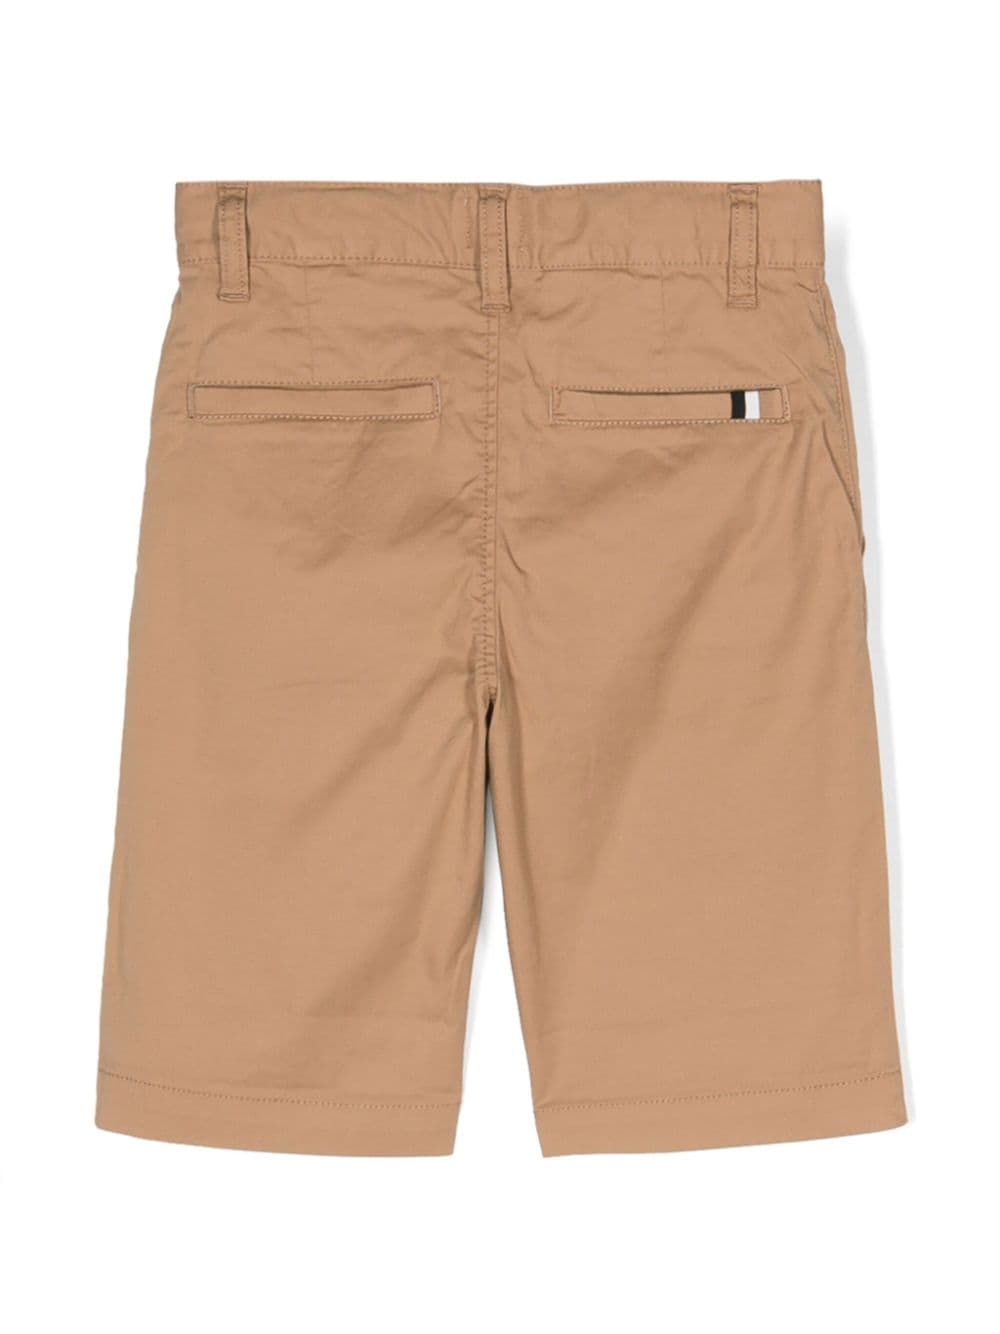 Brown Bermuda shorts for boys